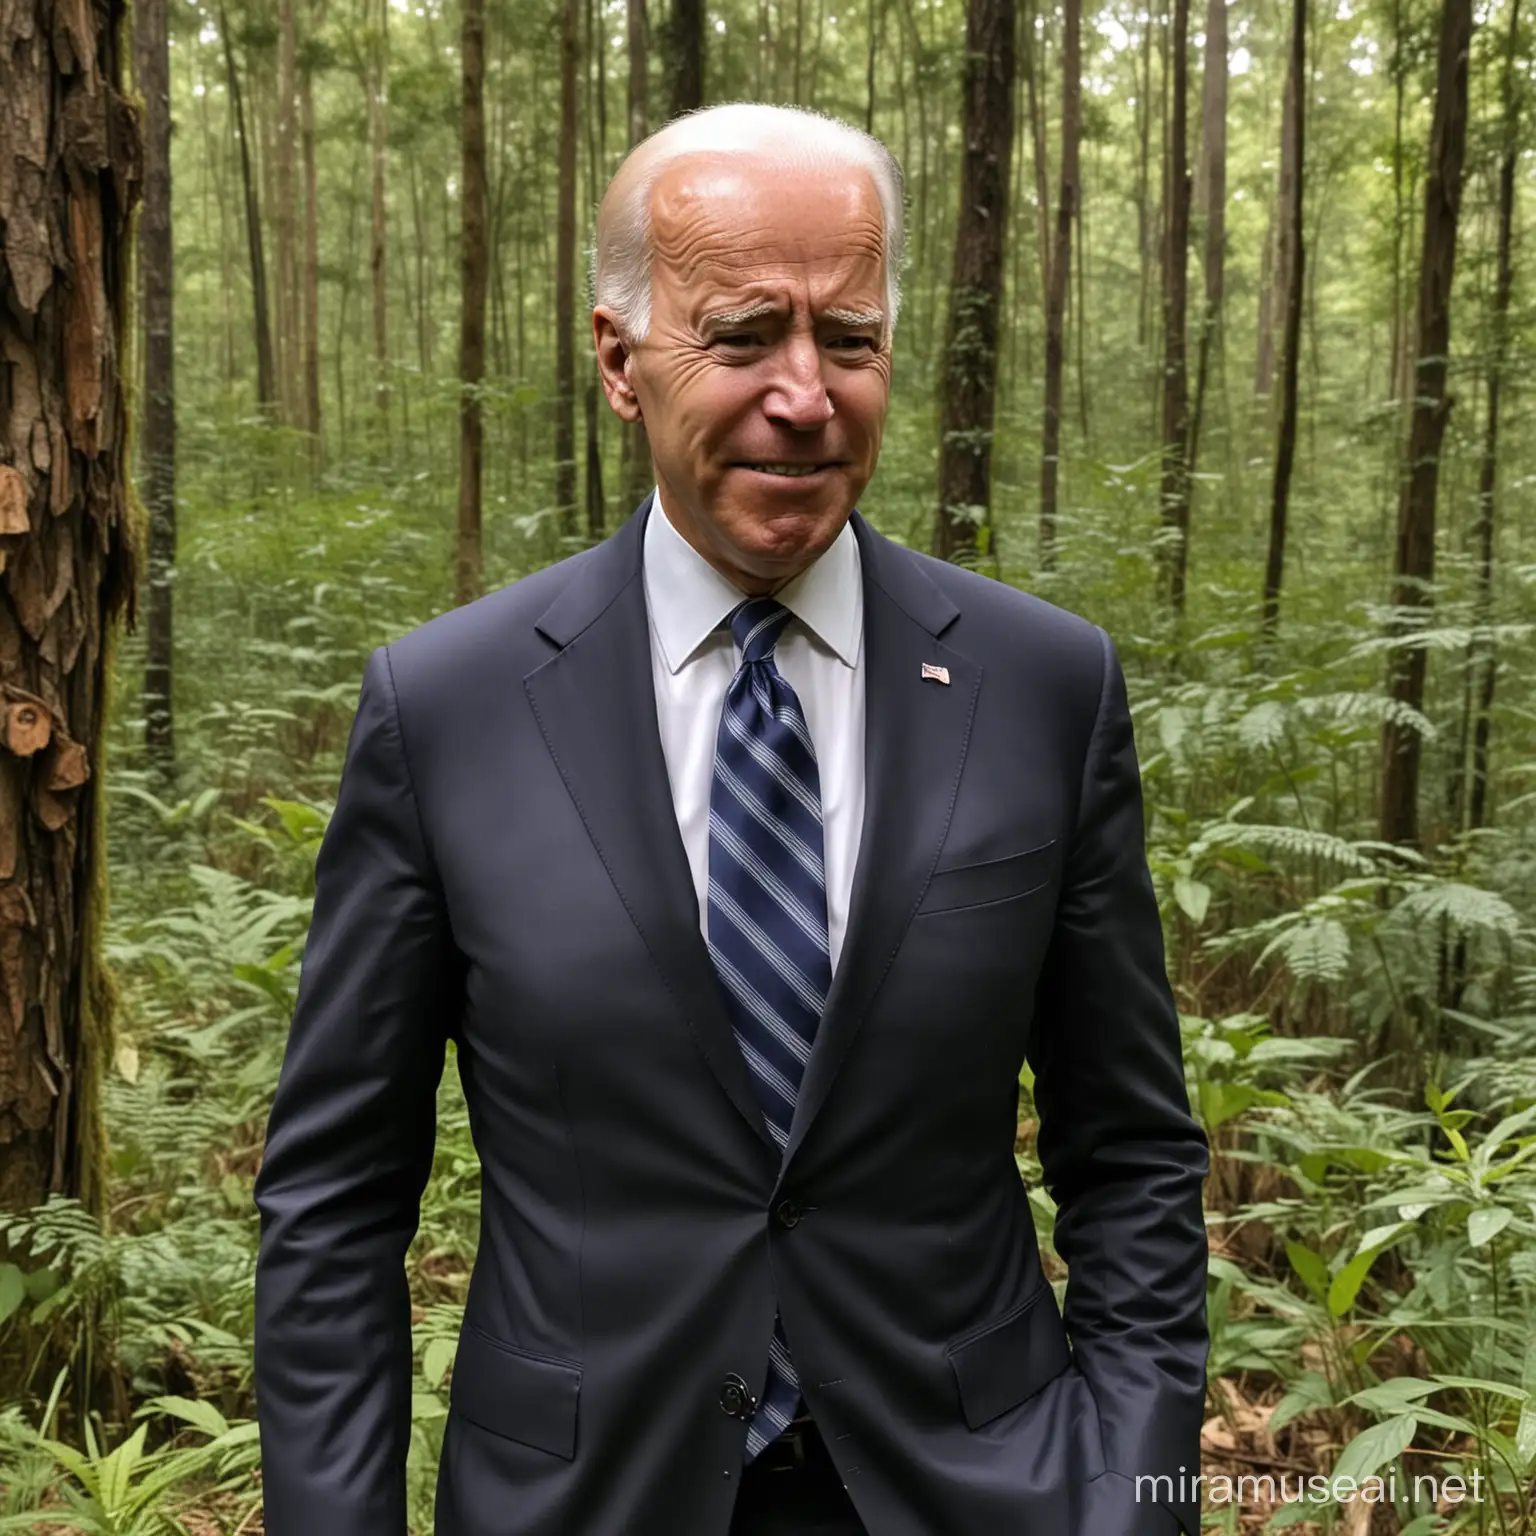  Joe Biden is crying and sad face . Joe Biden wears a suit.  amazon forest